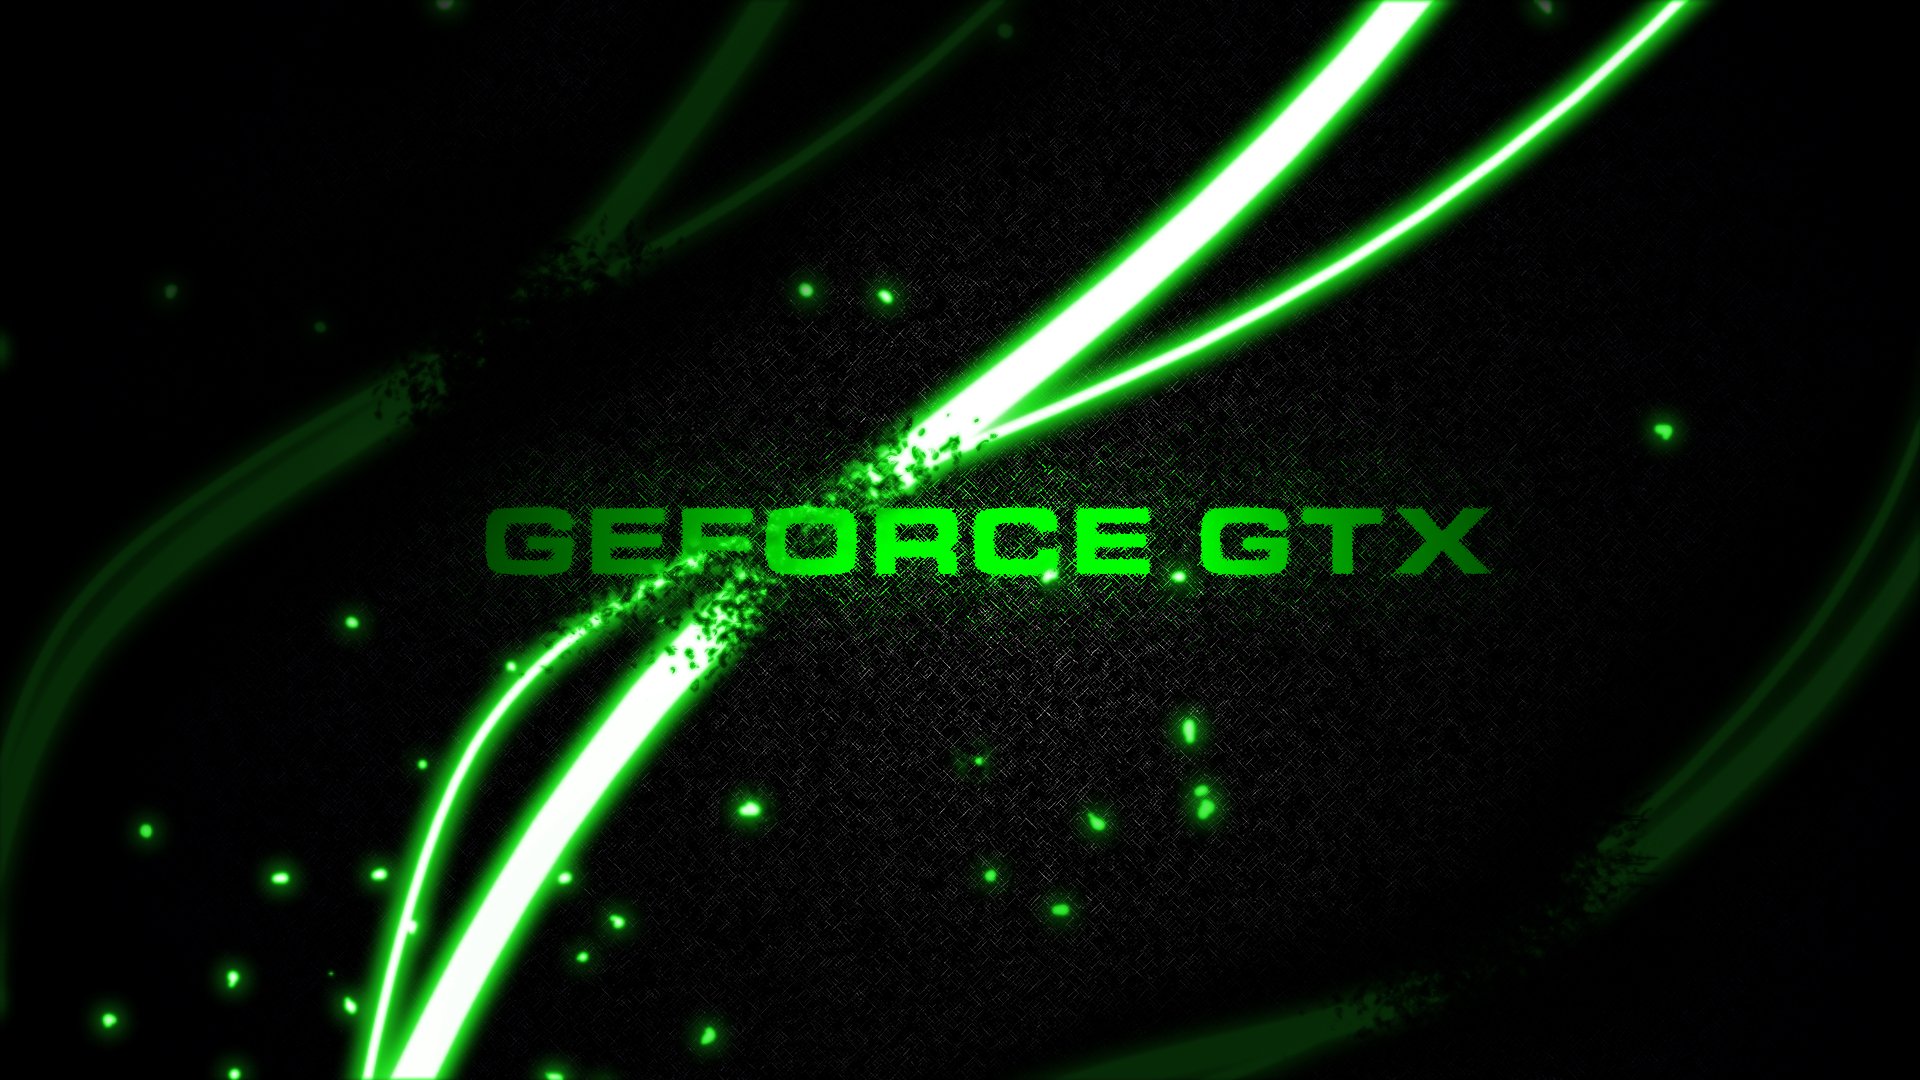 NVIDIA GEFORCE GTX gaming computer wallpaper 1920x1080 401226 1920x1080